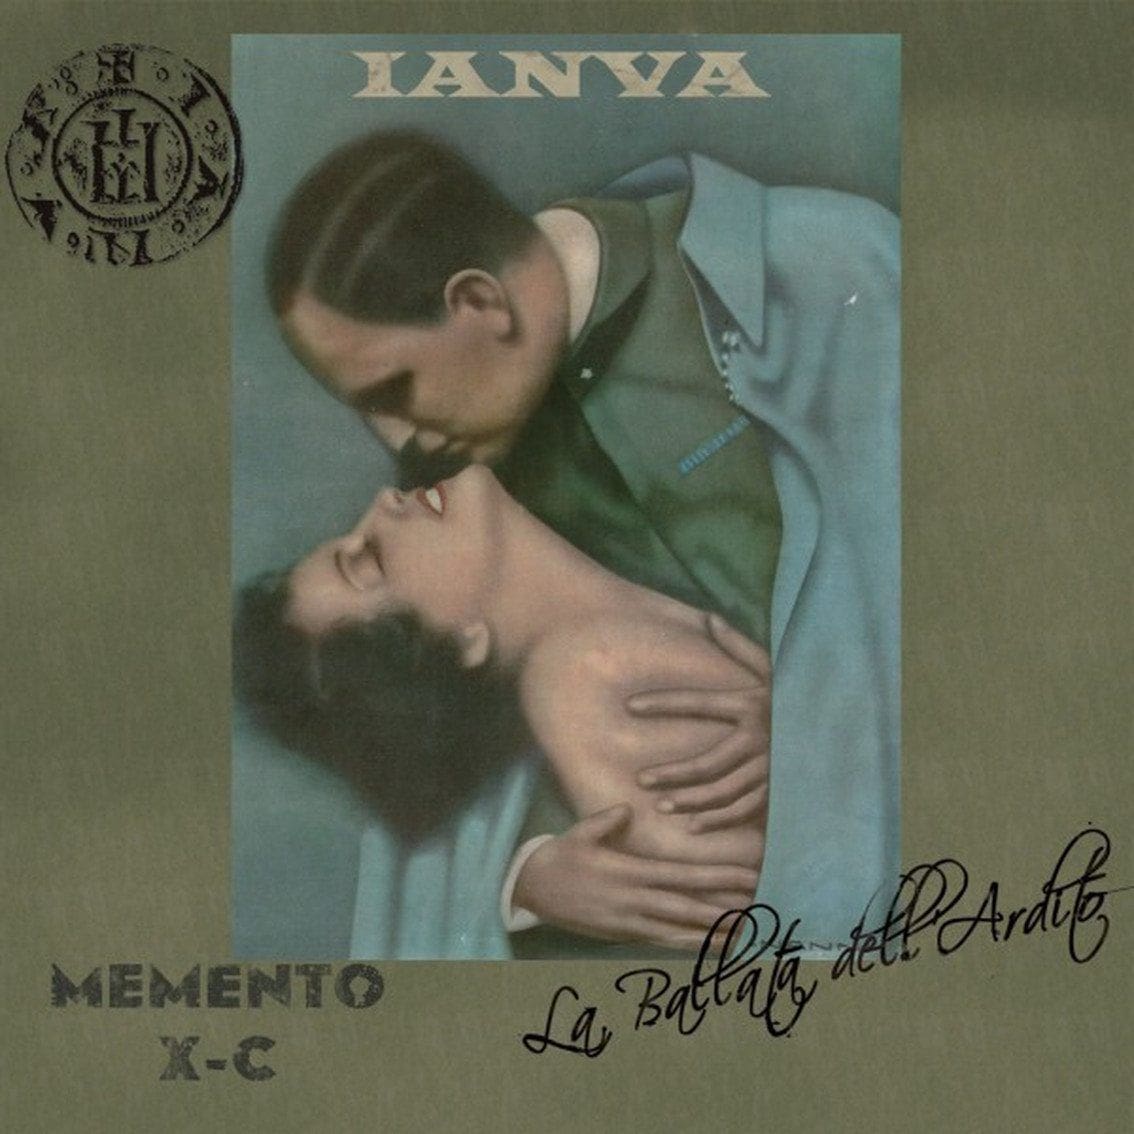 IANVA reissue 'La Ballata Dell'Ardito' debut EP with extras on vinyl